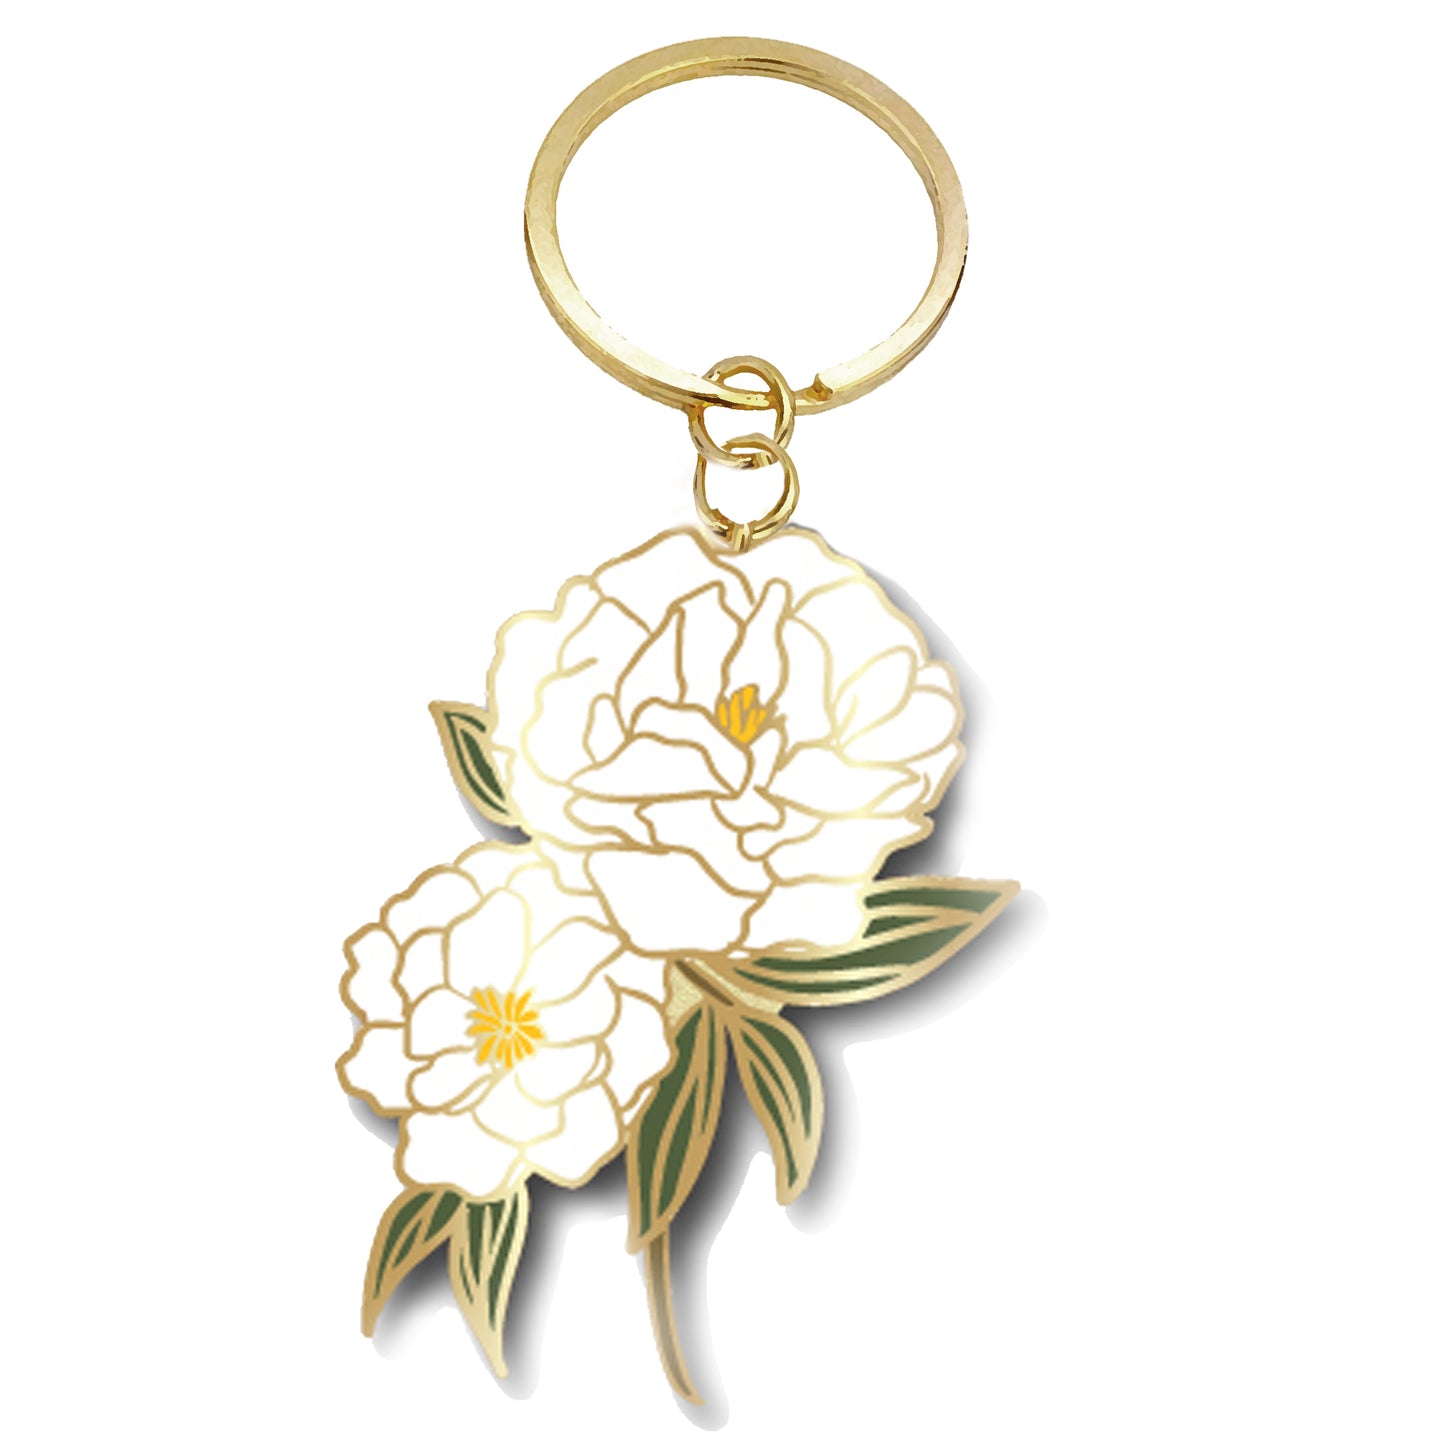 Enamel camellia keychain